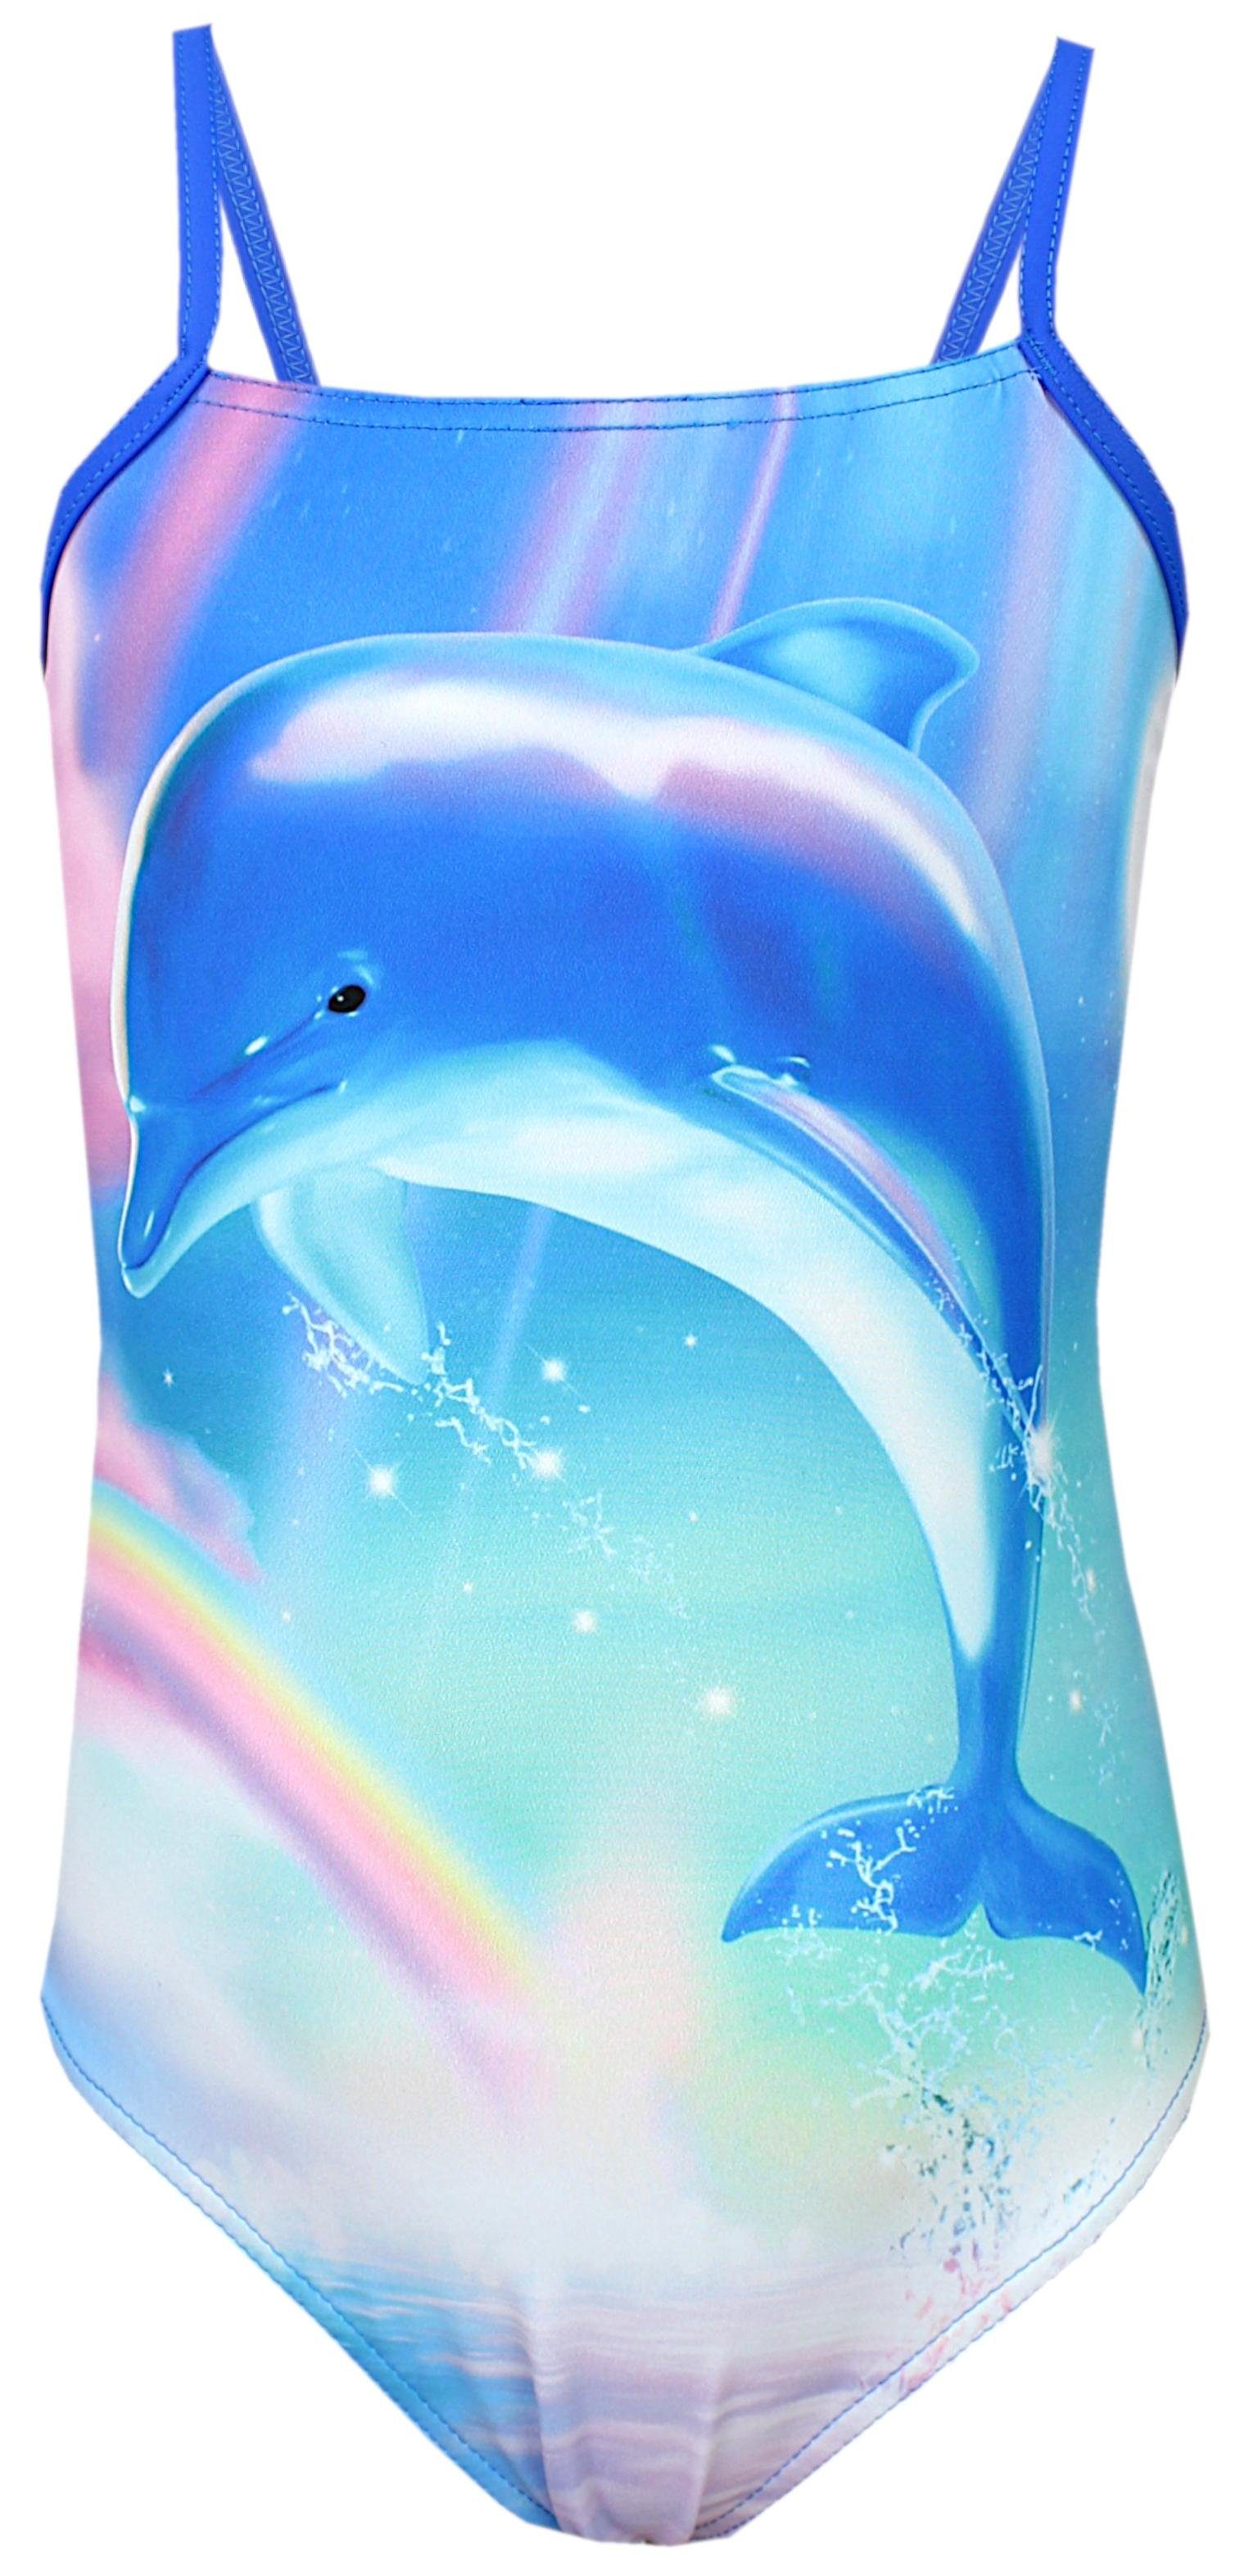 Aquarti Badeanzug Aquarti / mit / Spaghettiträgern Badeanzug Regenbogen Rosa Mädchen Blau Streifen Delphin 